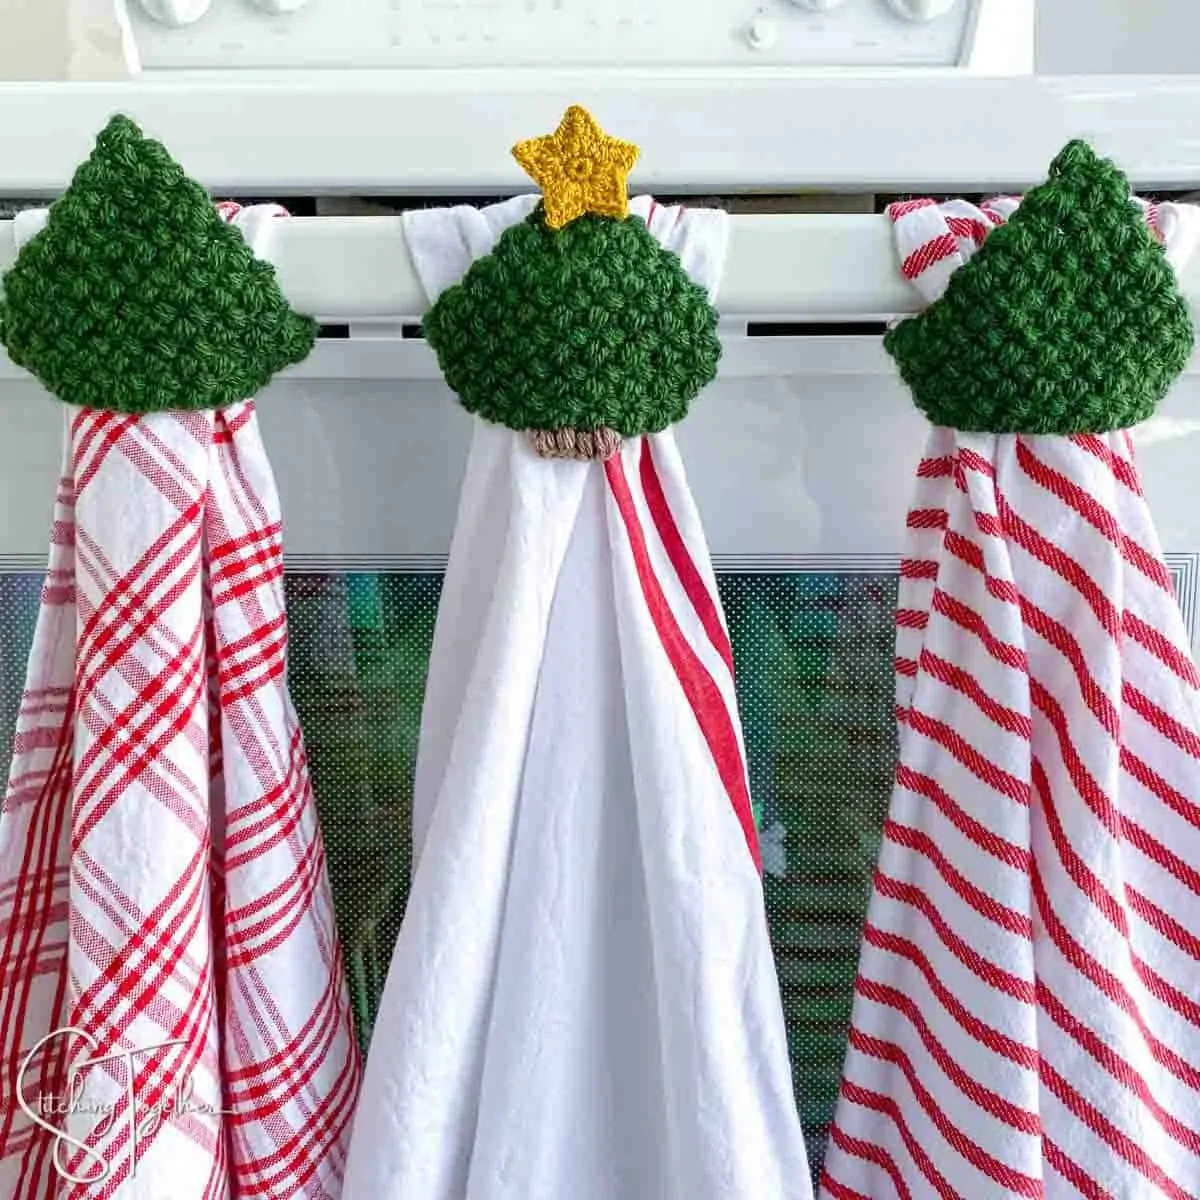 Christmas Words Towel - christmas towels